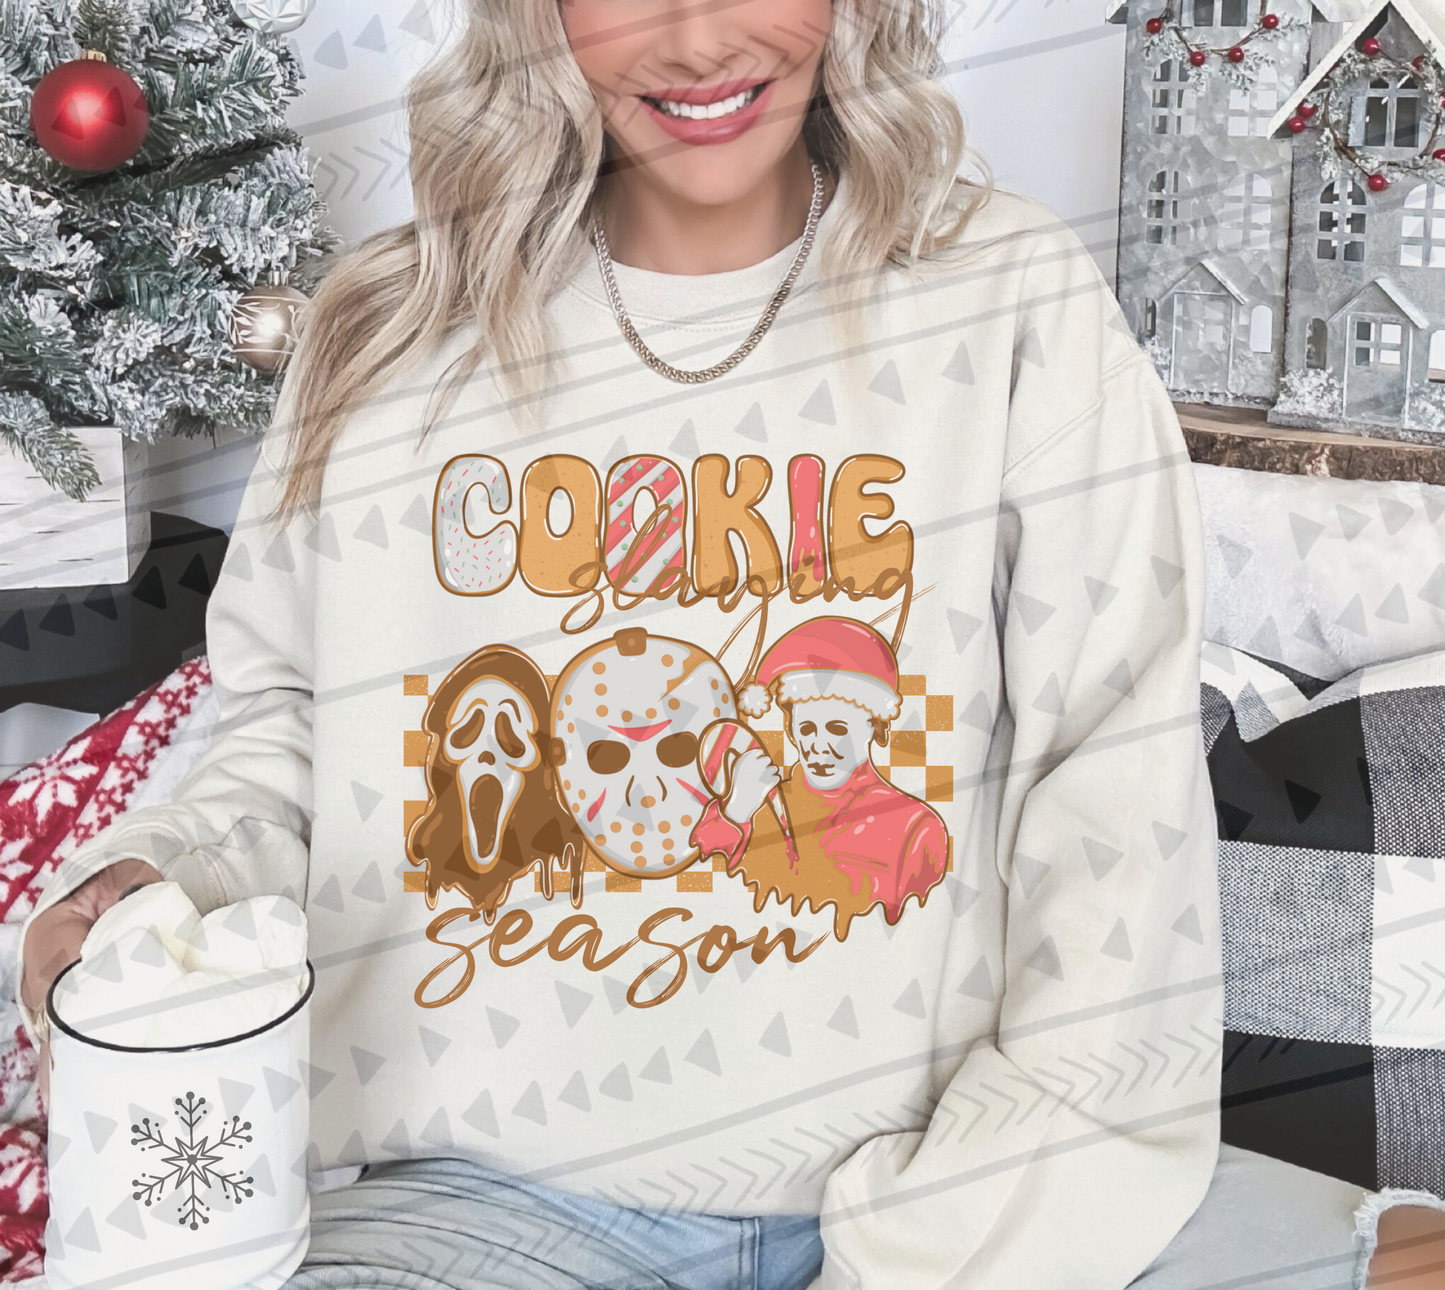 Cookie Slaying Season DTF Transfer